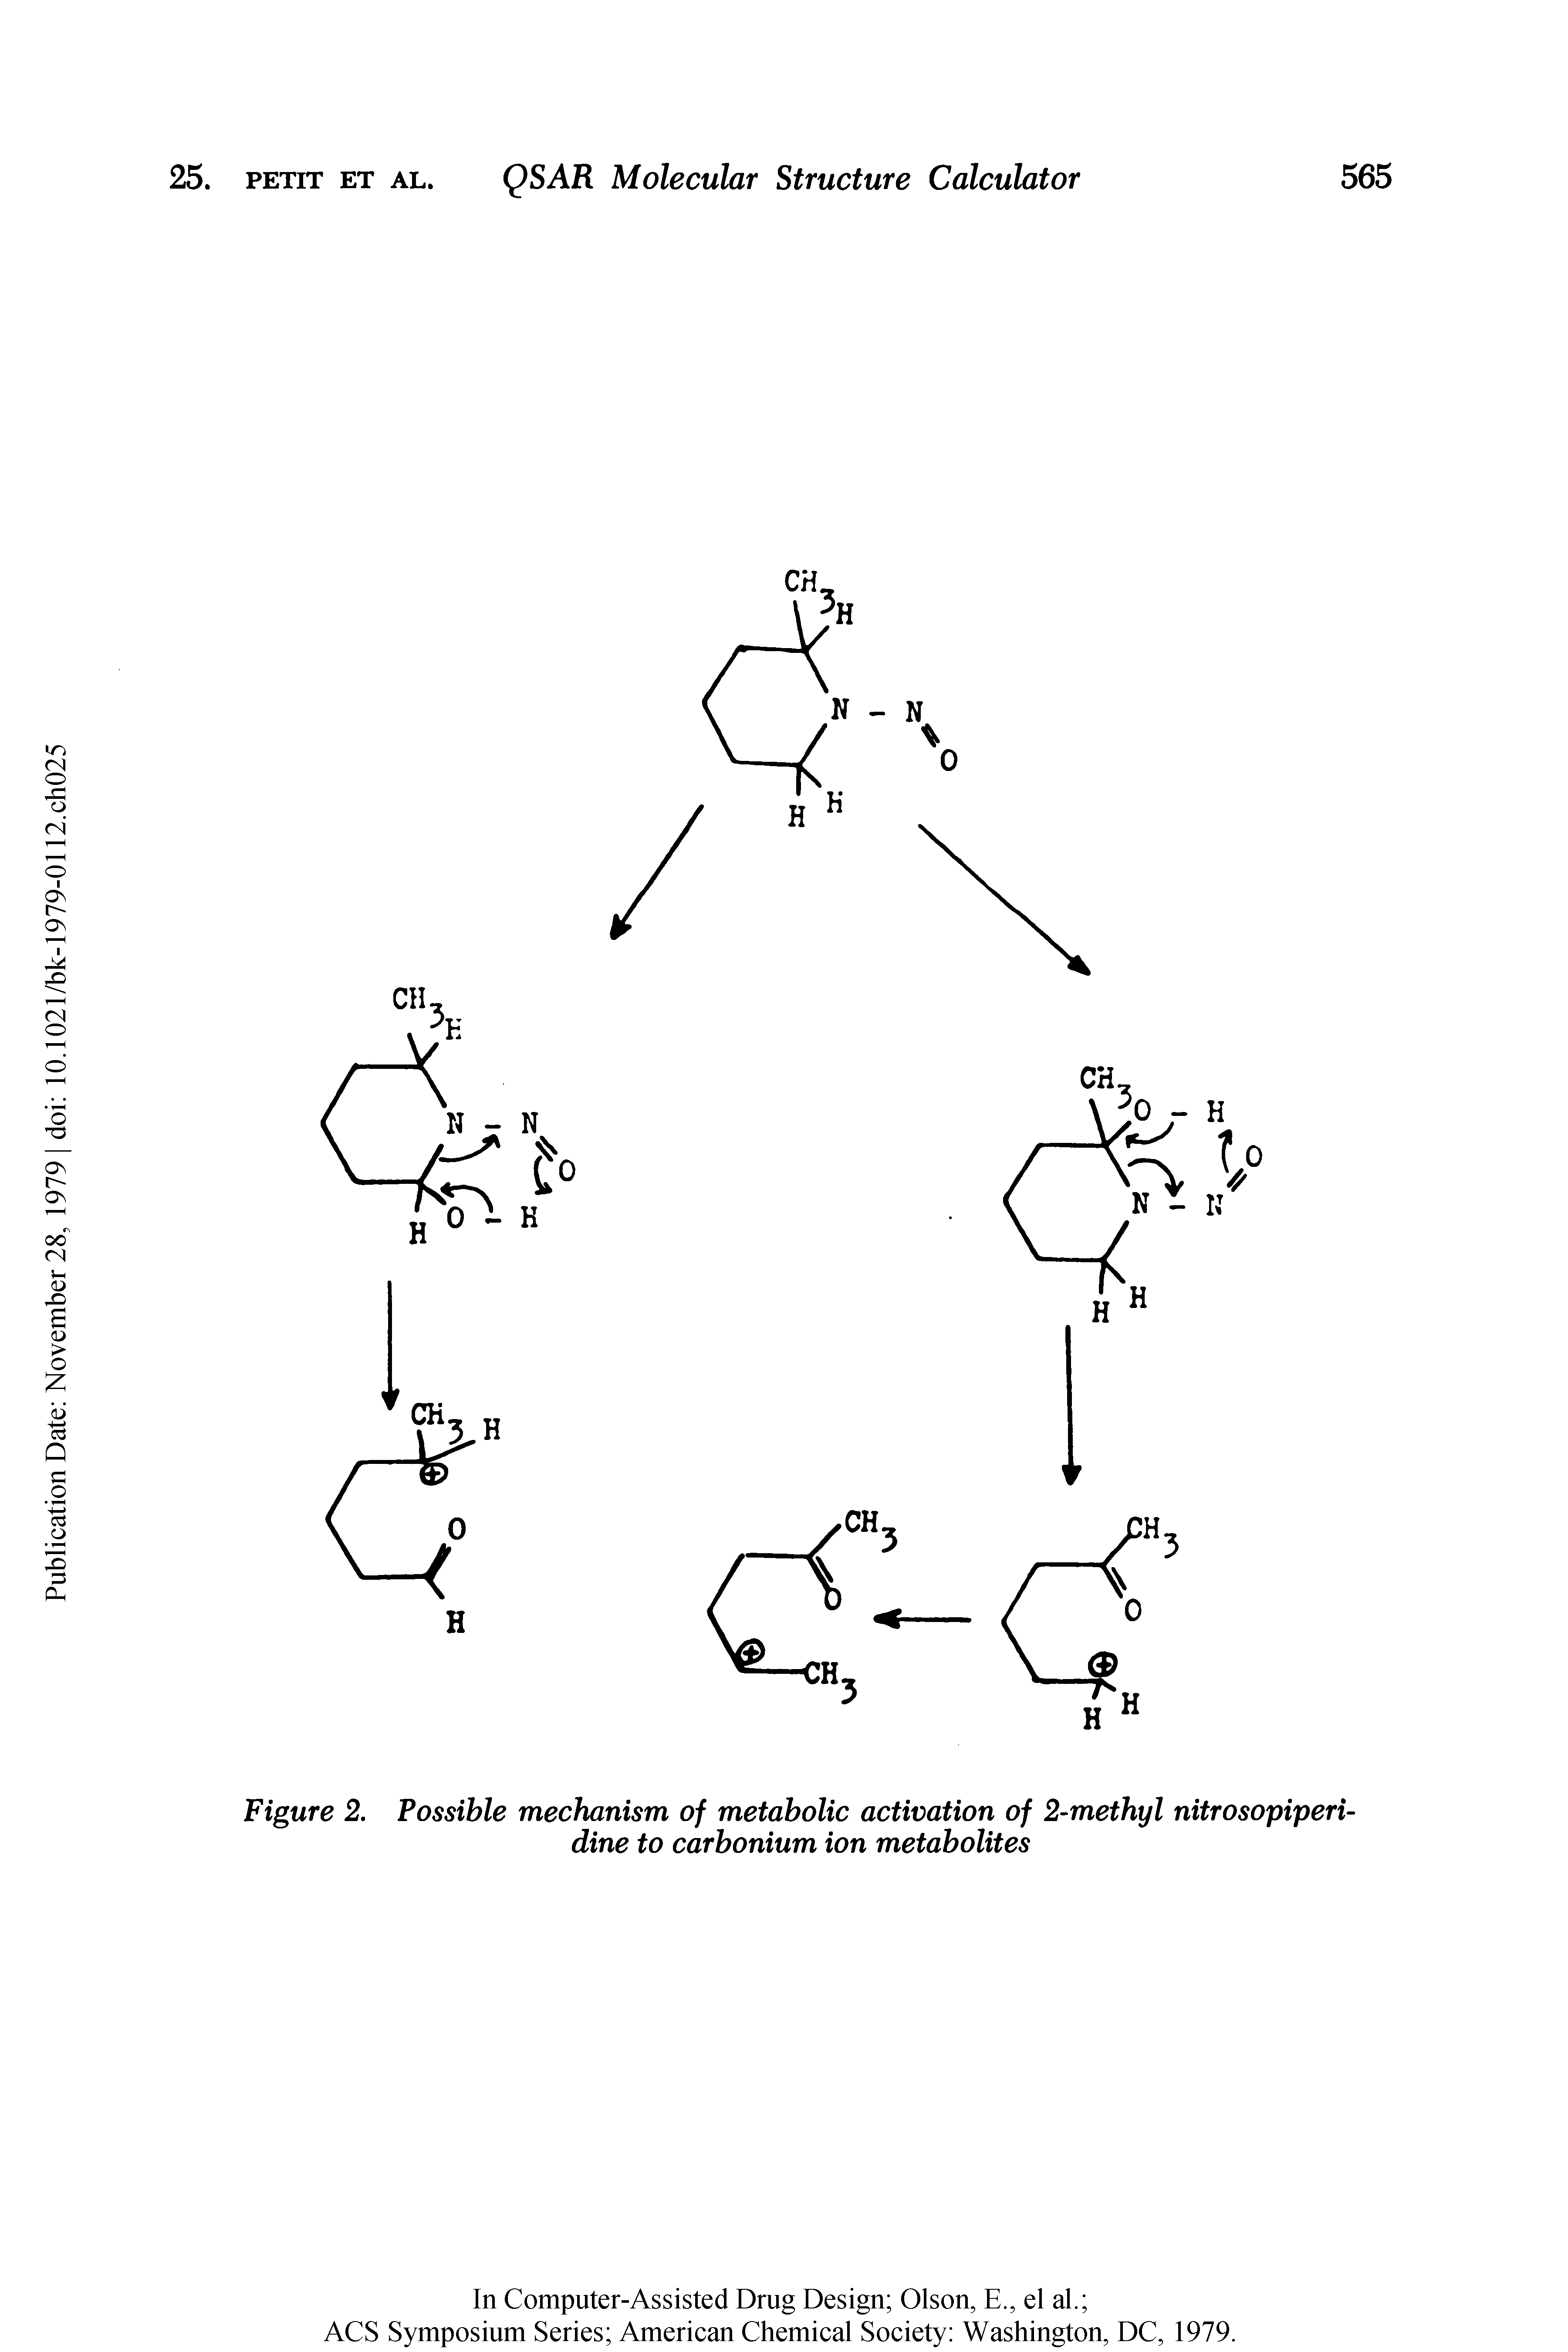 Figure 2. Possible mechanism of metabolic activation of 2-methyl nitrosopiperi-dine to carbonium ion metabolites...